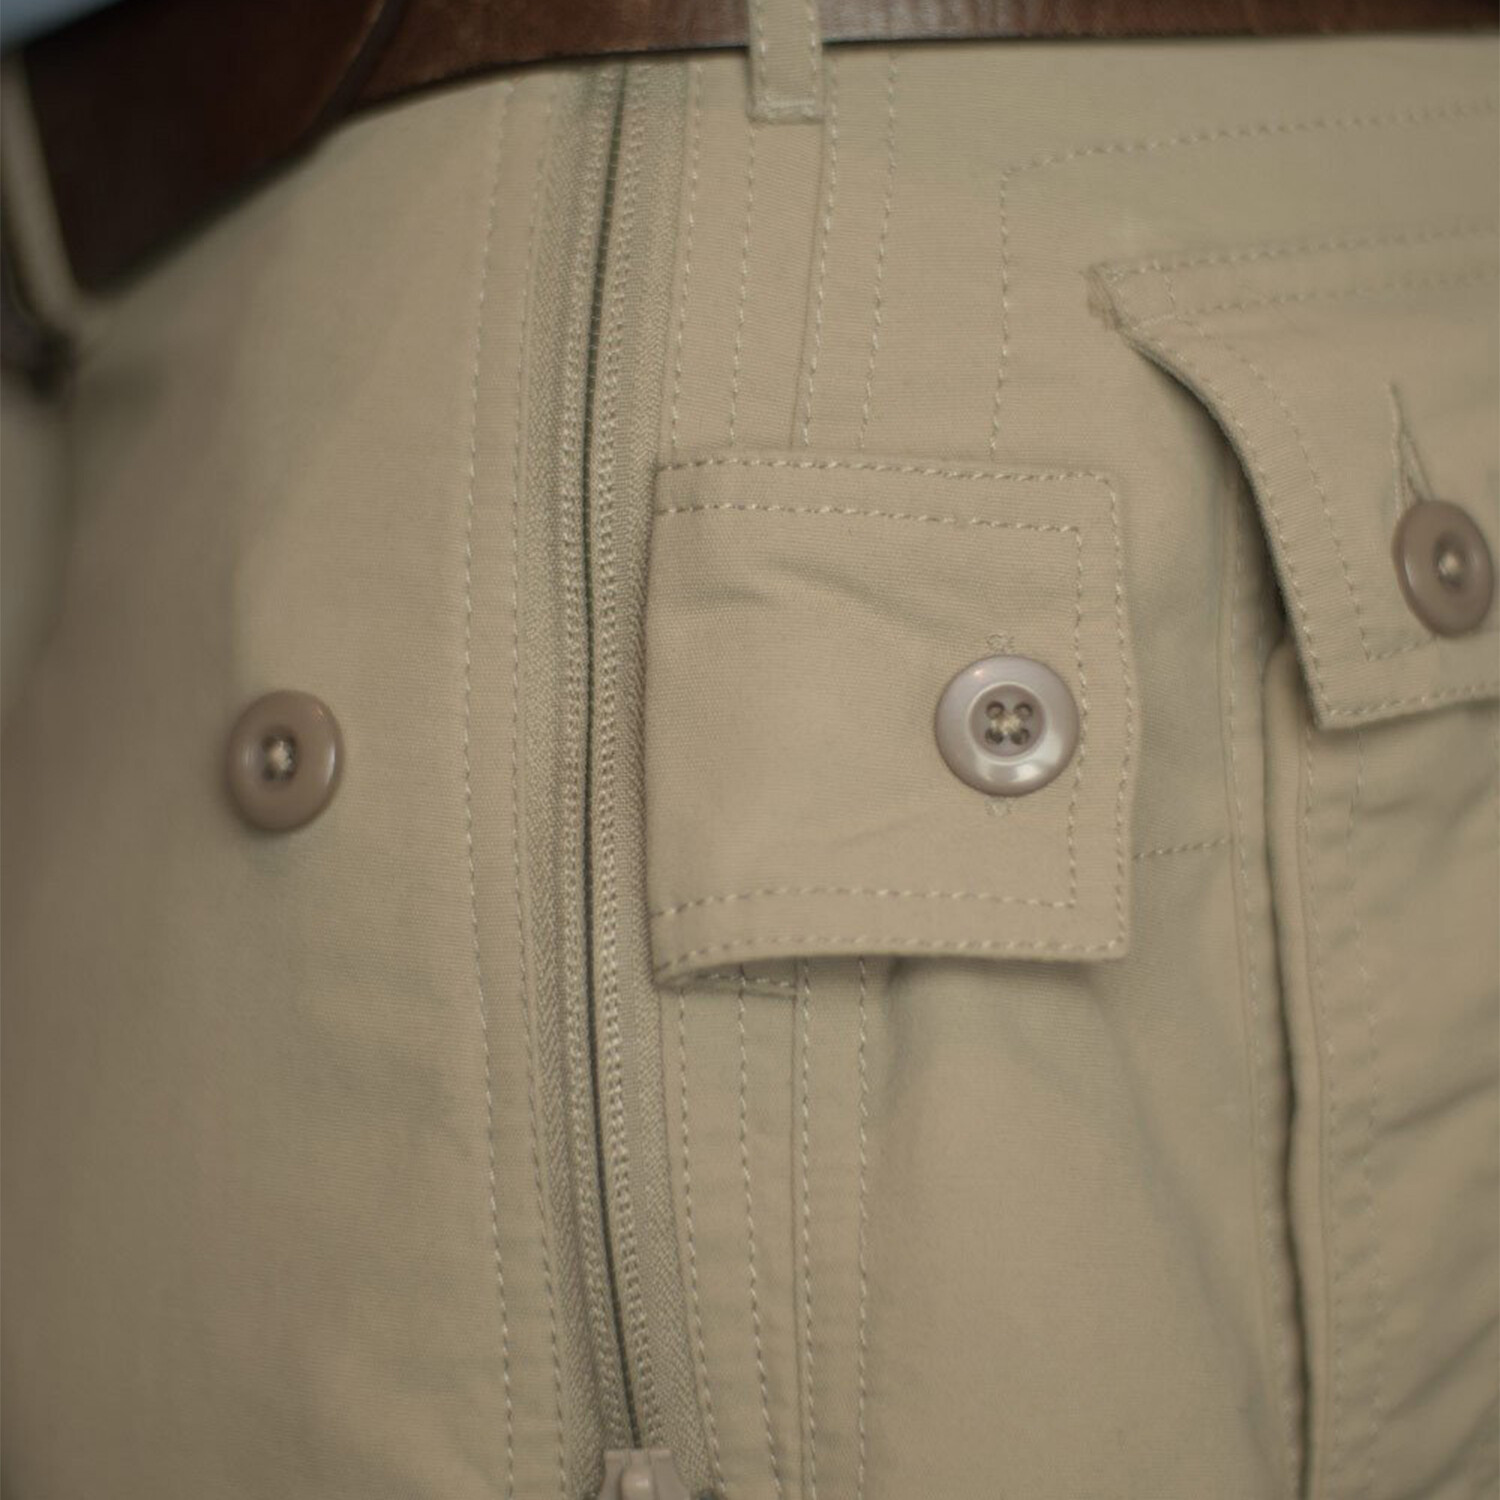 Pick-Pocket Proof® Adventure Travel Pants // Khaki (42W x 30L) - Clothing  Arts - Touch of Modern